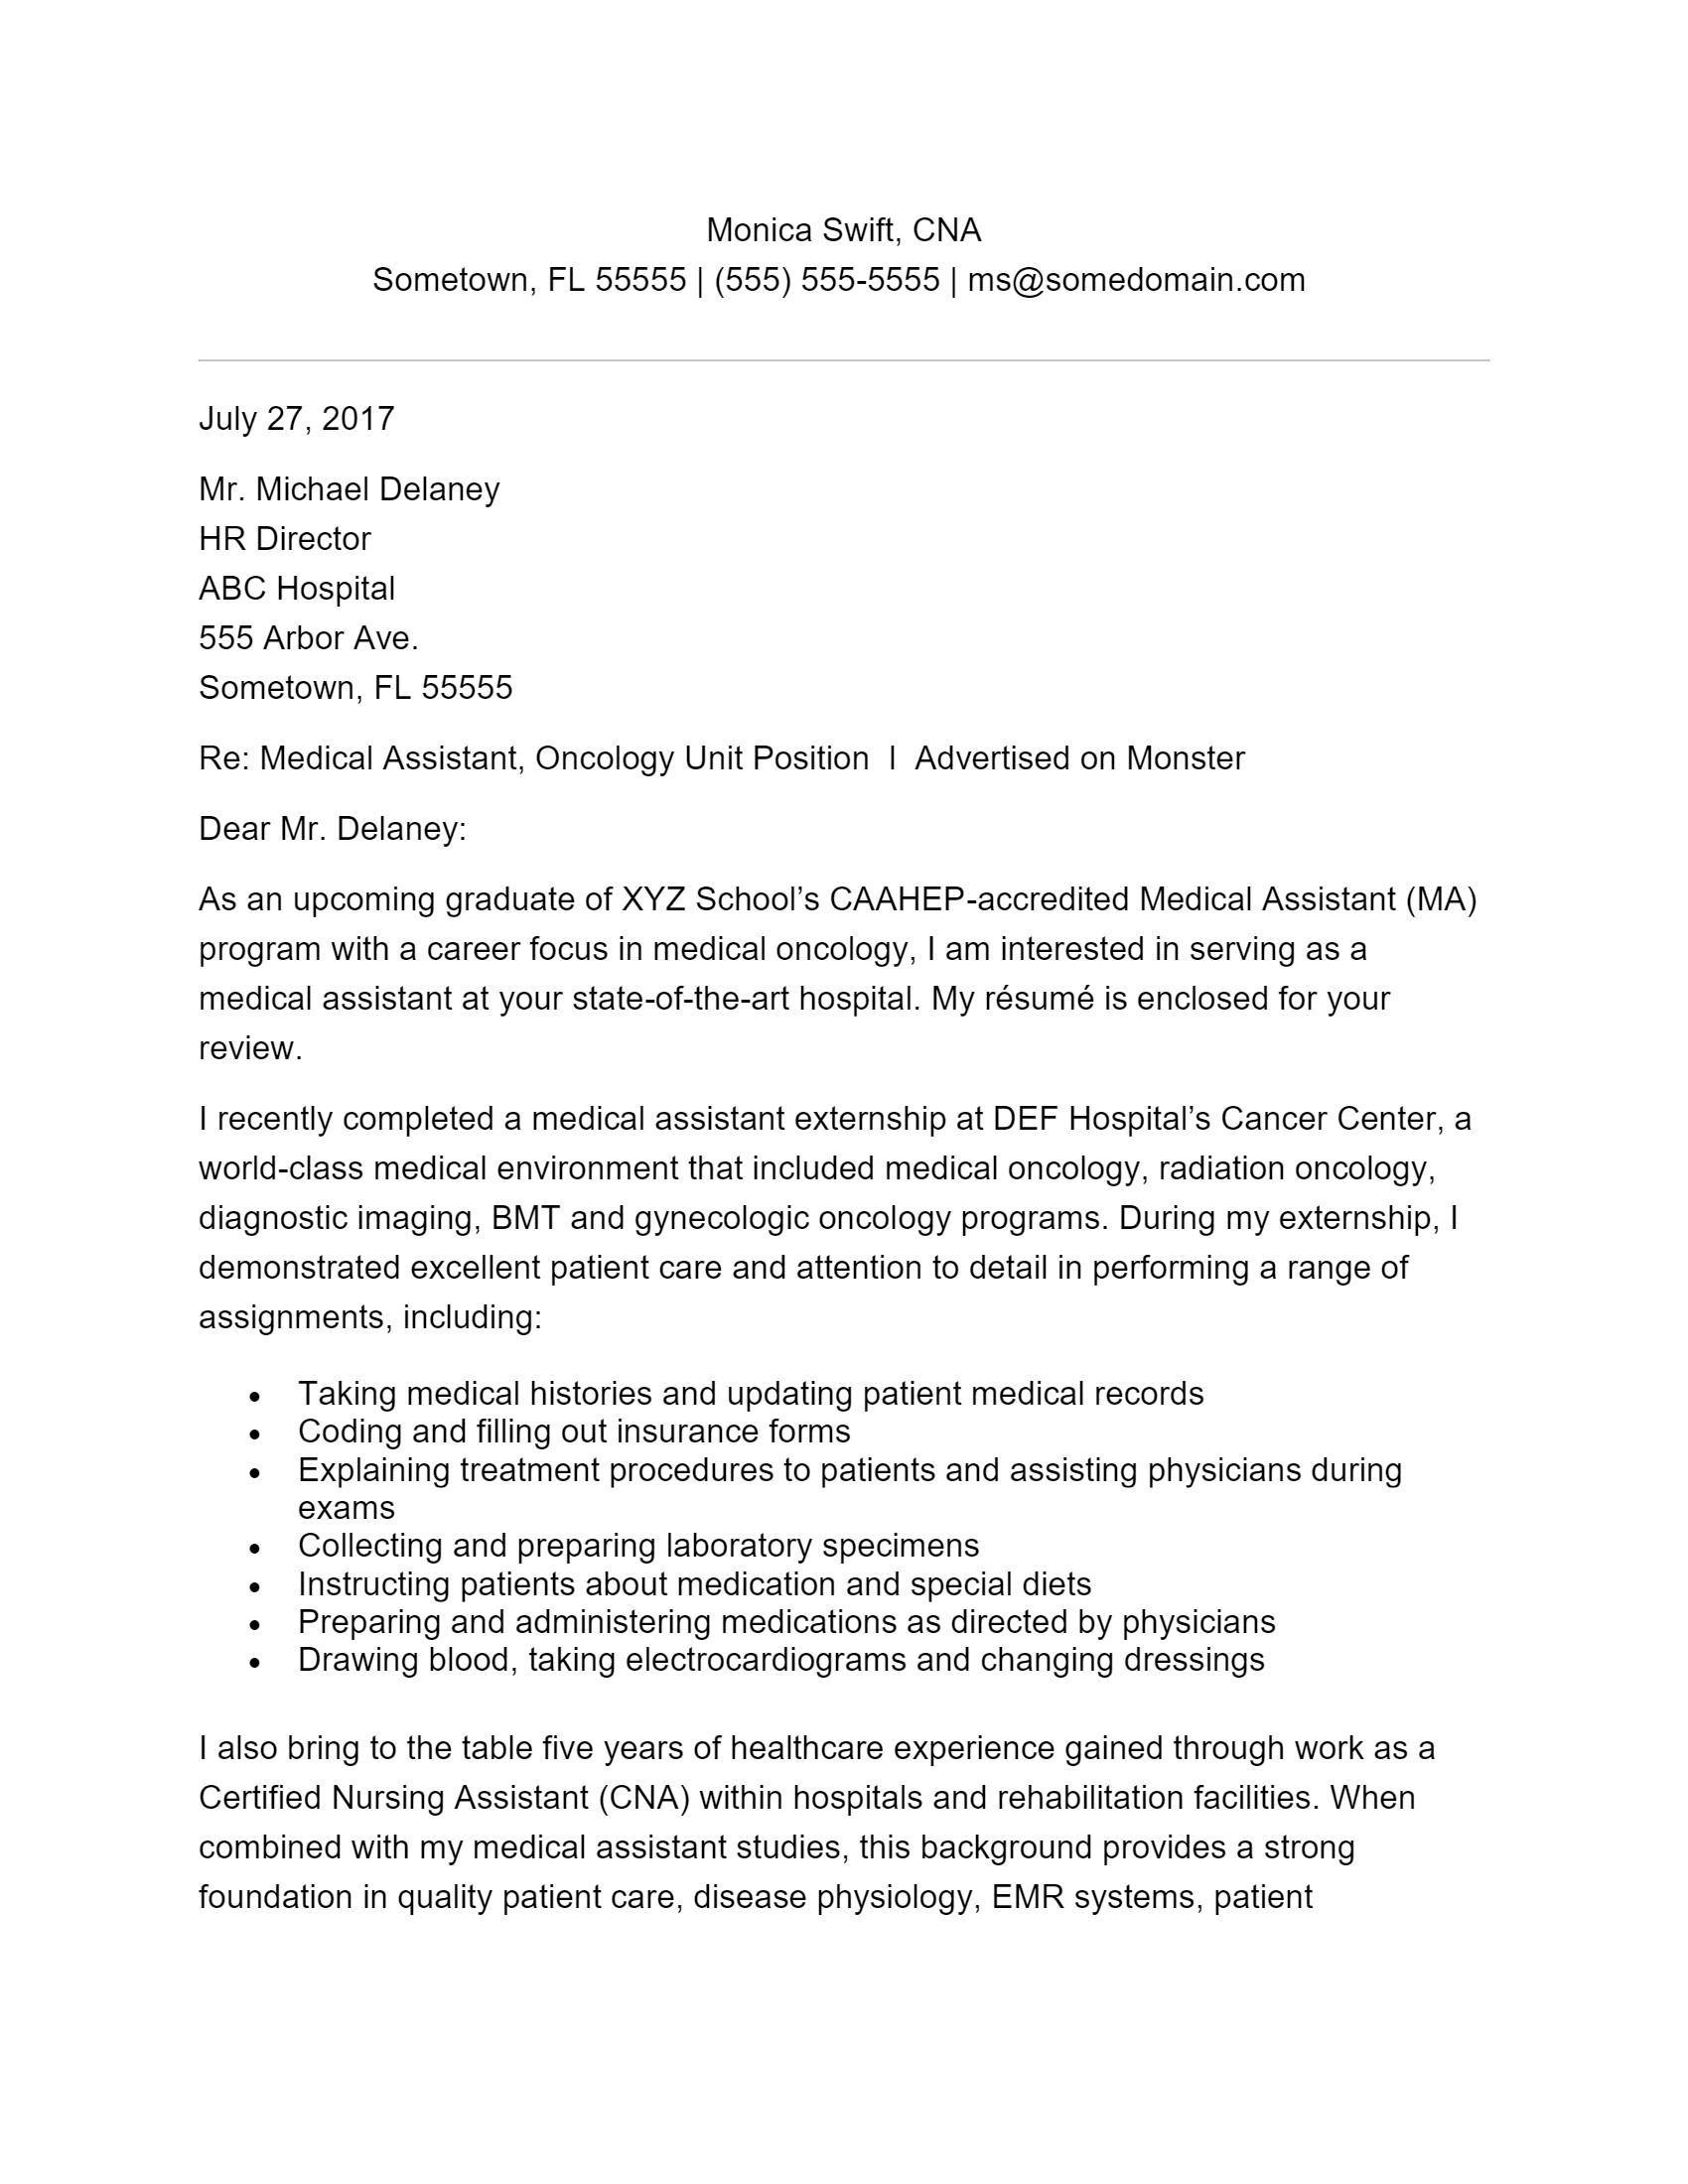 resume cover letter medical assistant